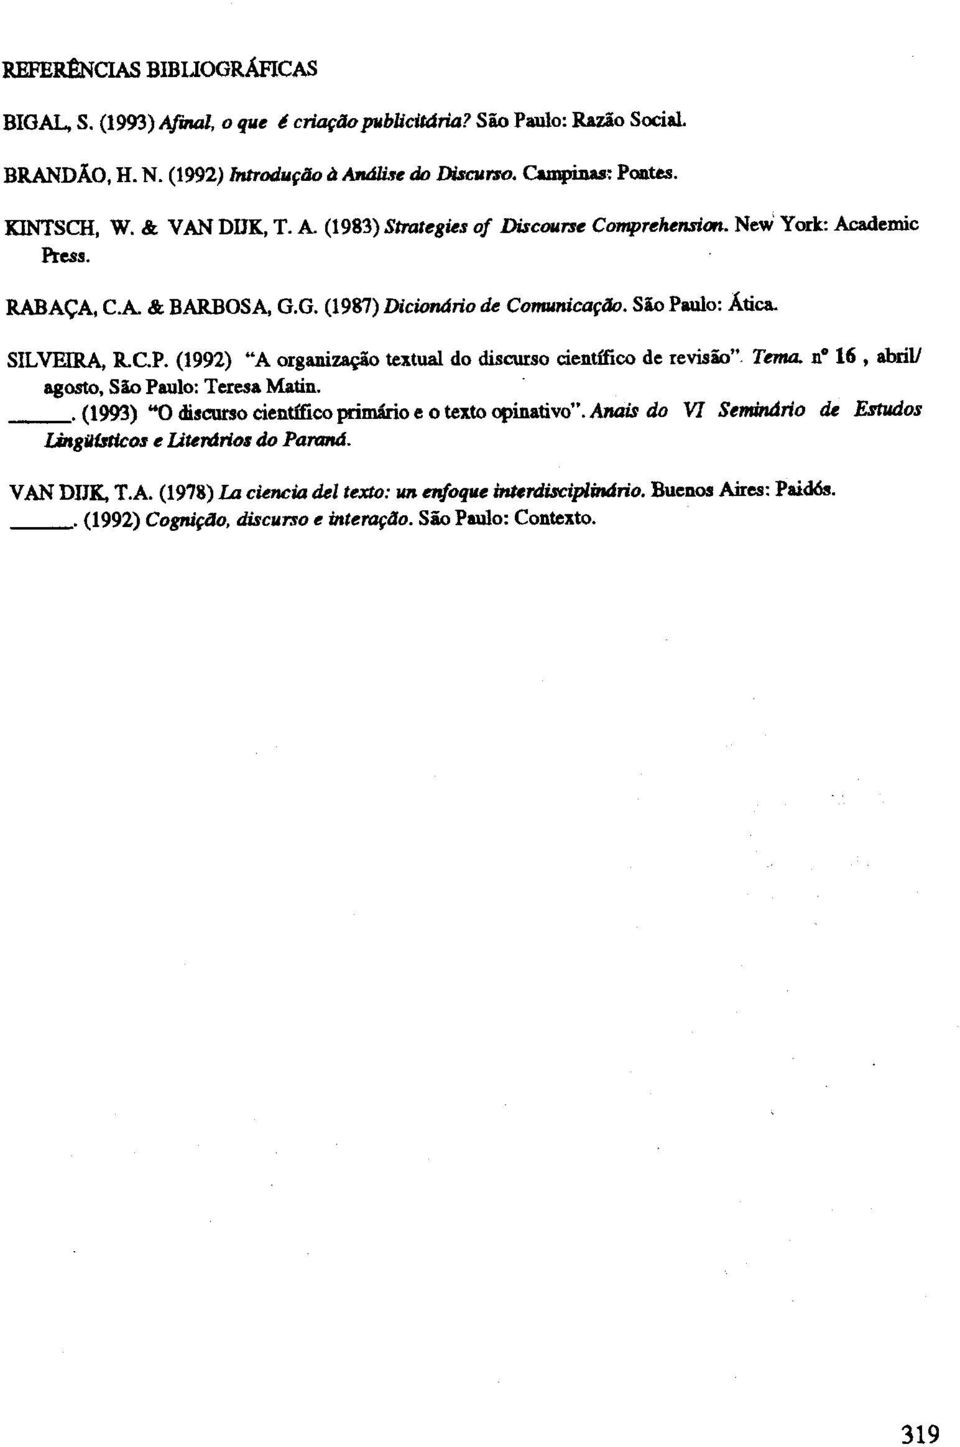 n 16 abrilj agosto, Sio Paulo: Teresa Matin.. (1993) "0 discurso cientffico primano eo texto opinativo".